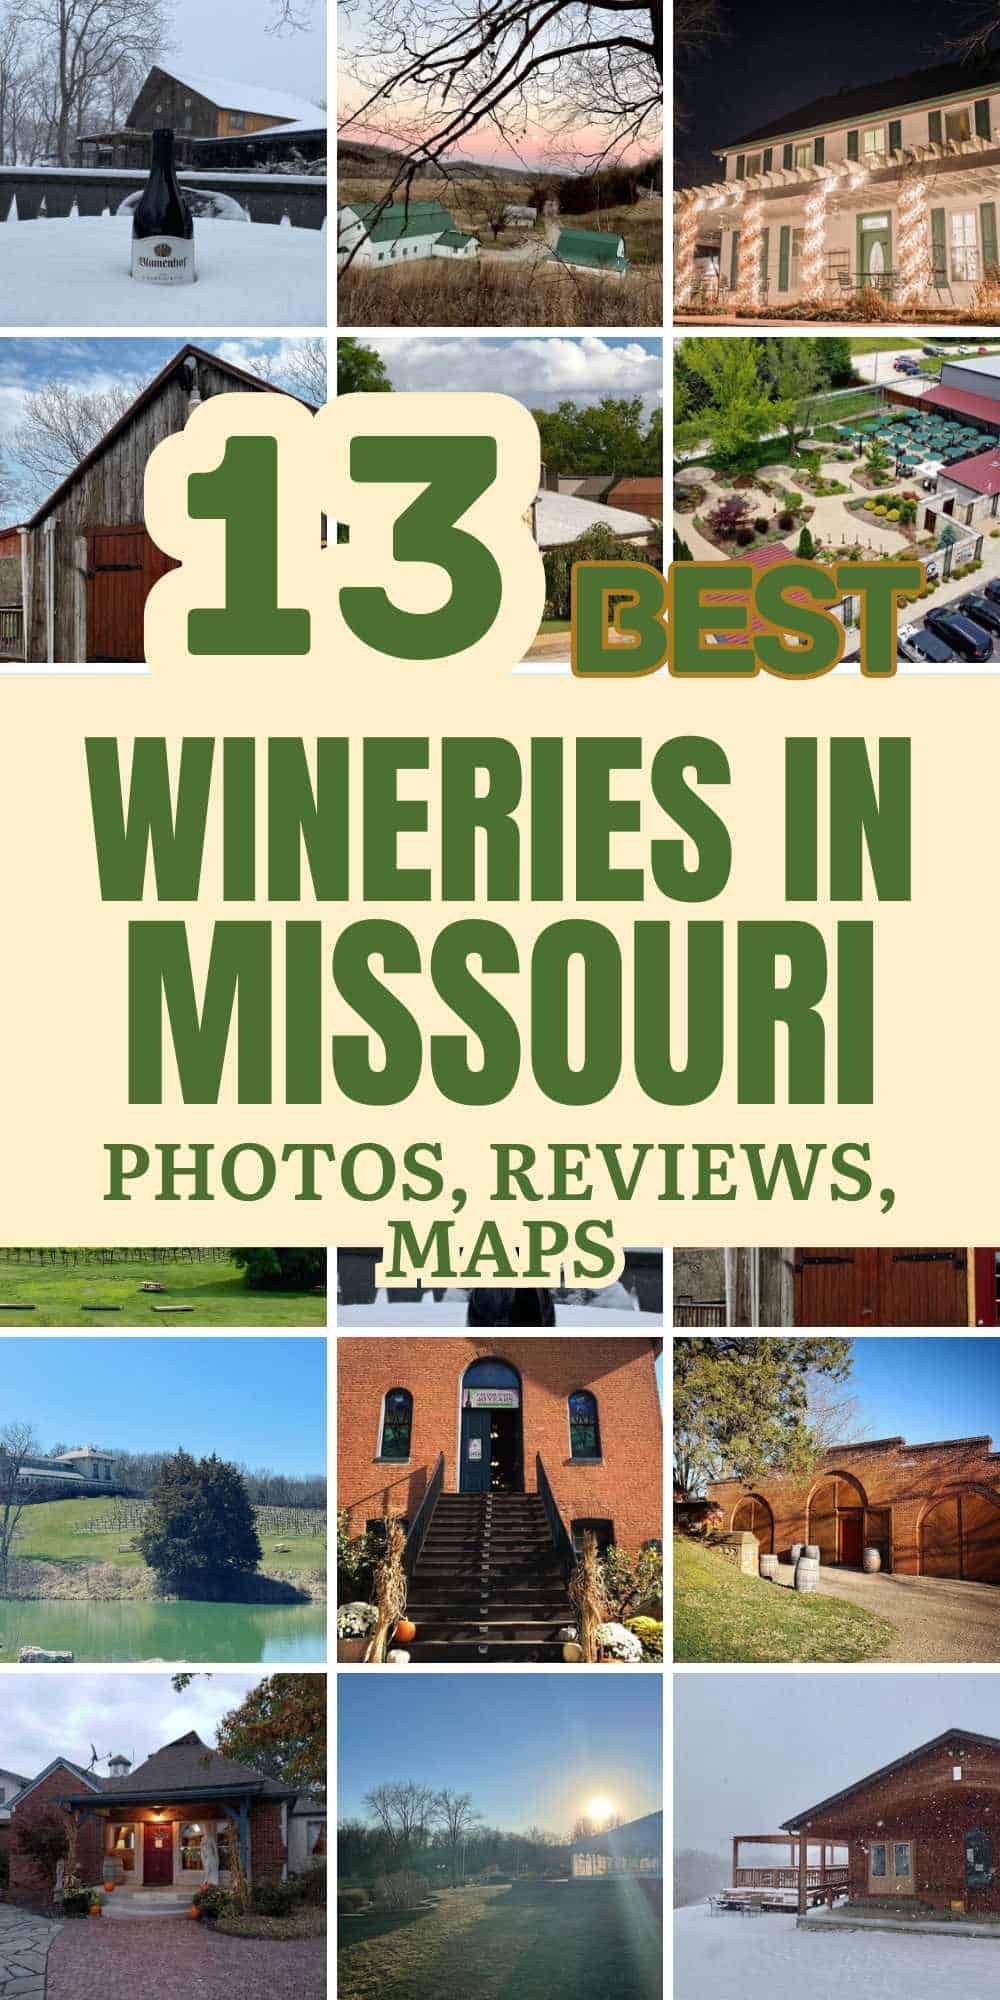 Wineries in Missouri